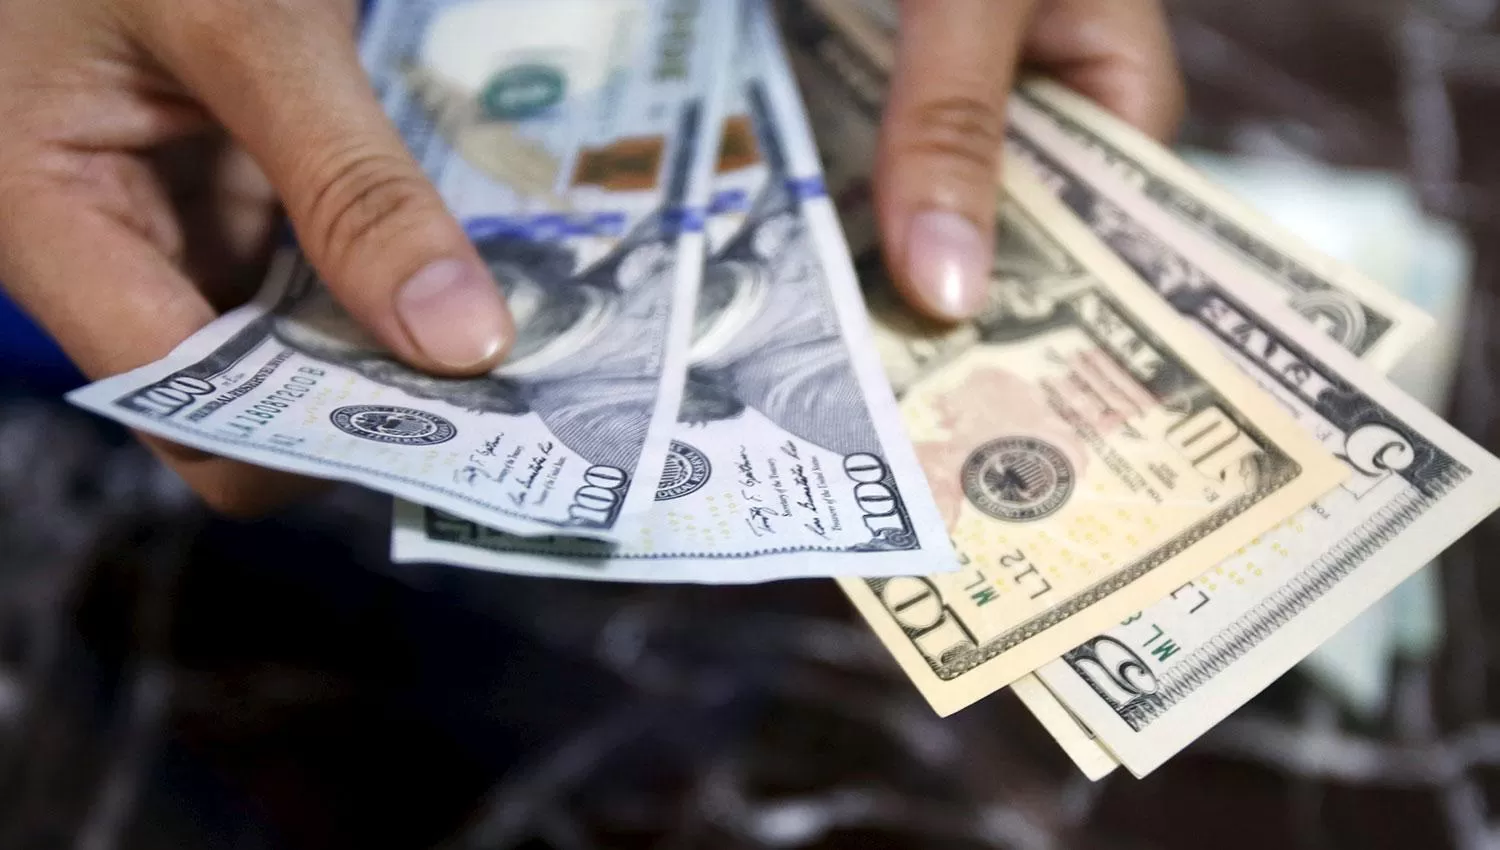 El dólar blue se negocia a $ 186 en la City tucumana